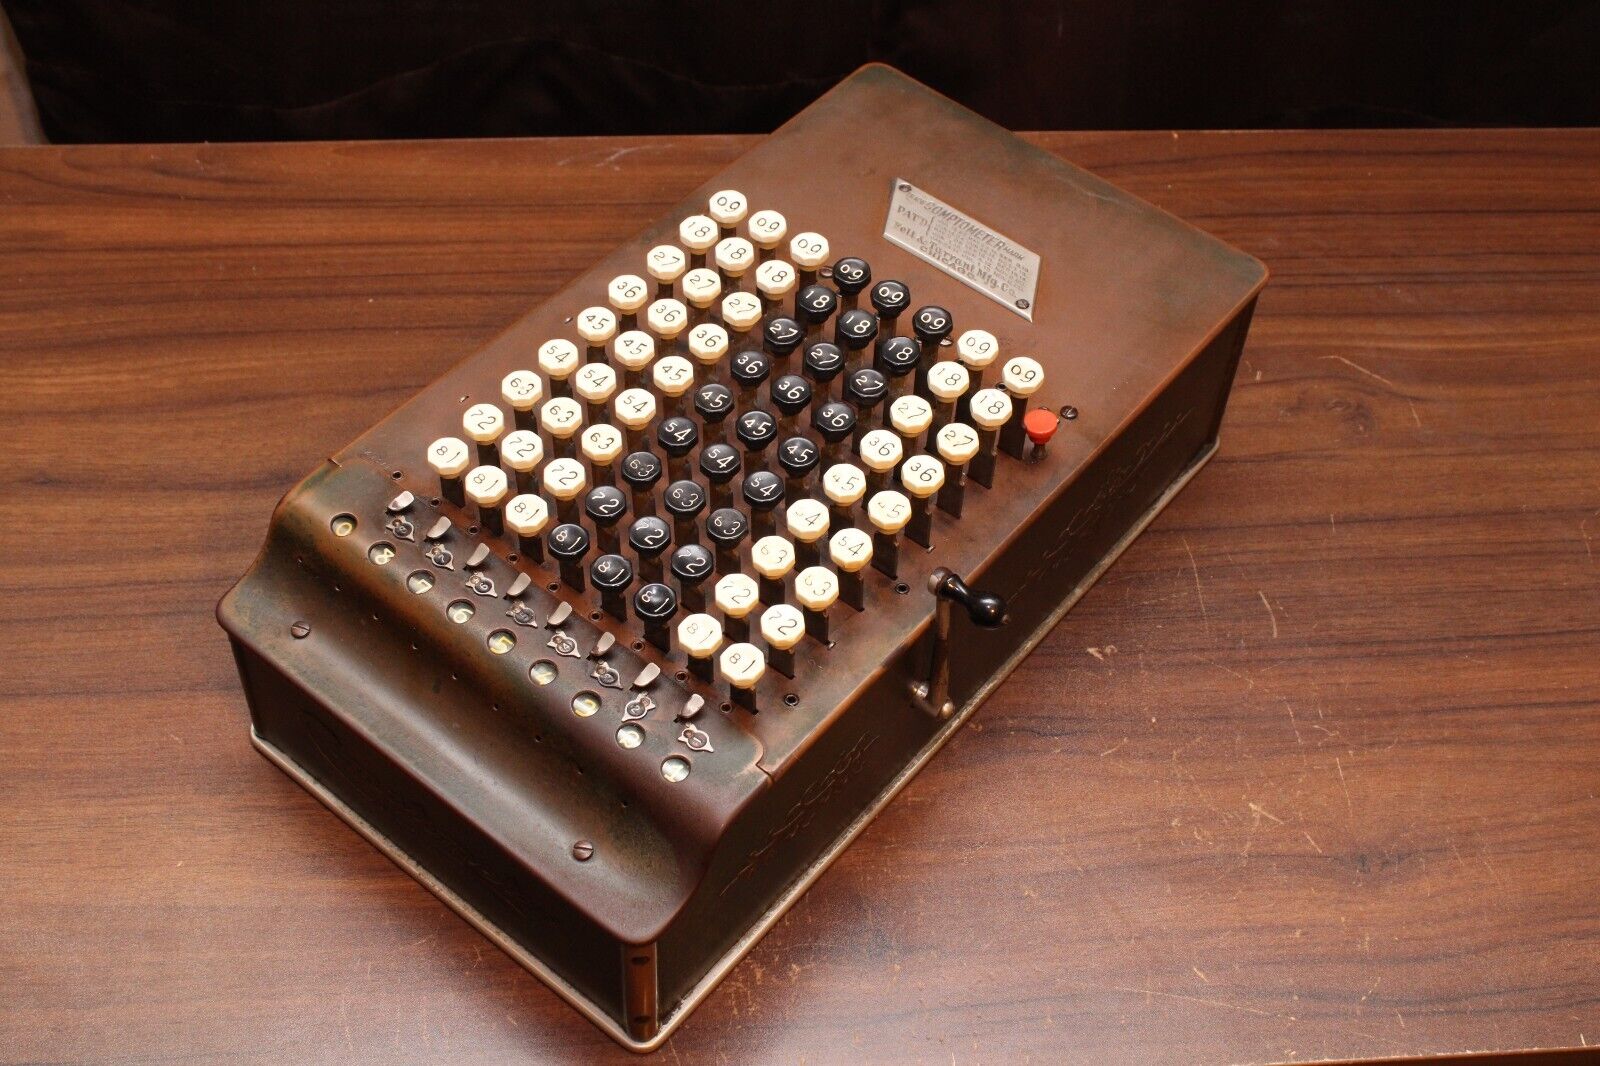 Working Vintage Comptometer Adding Machine, Calculator